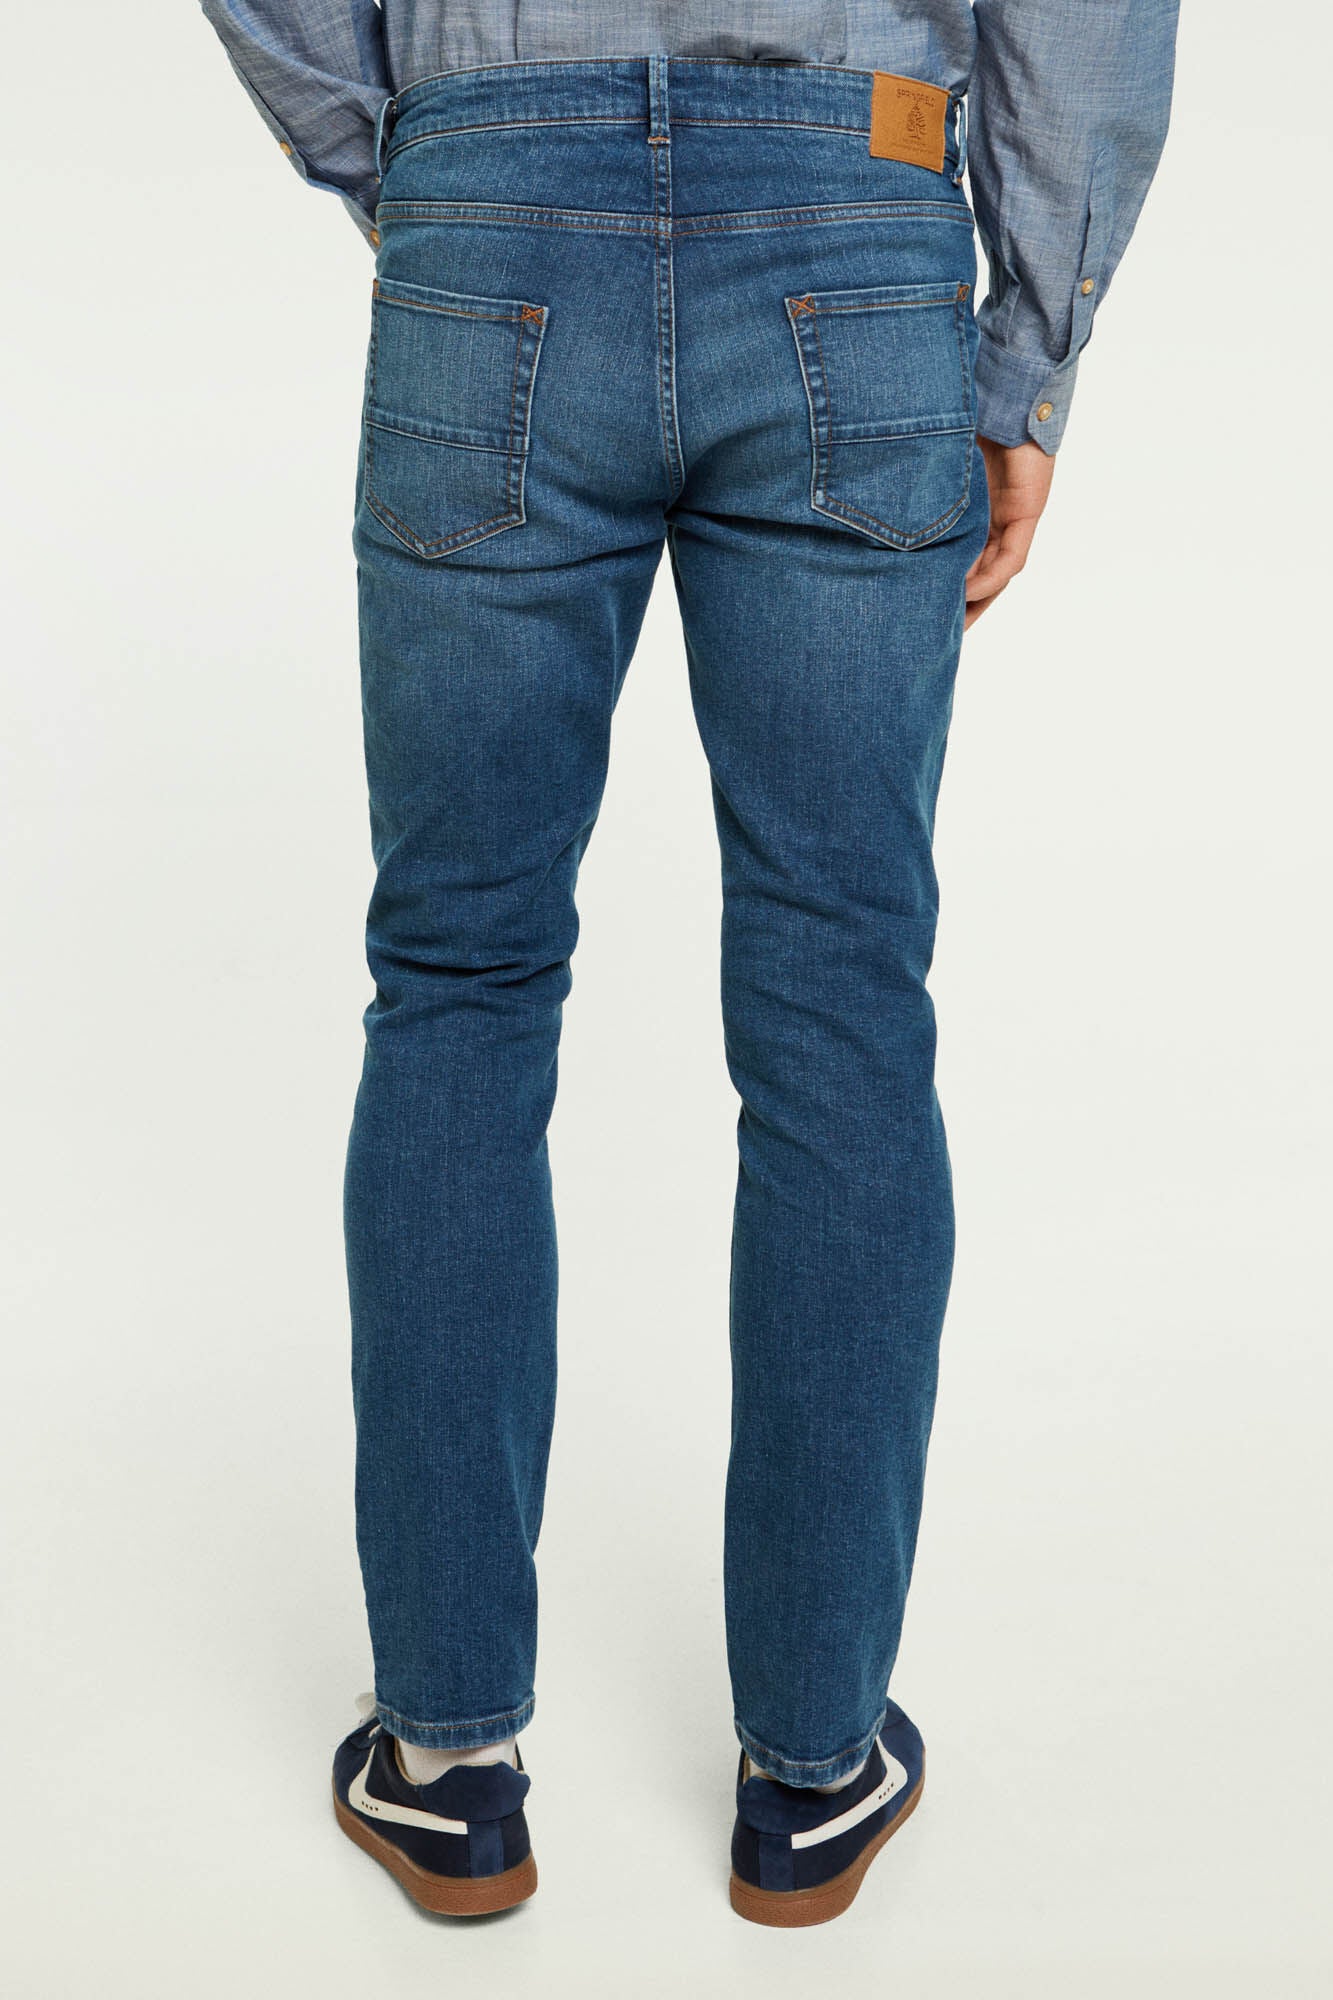 Medium-dark wash slim fit jeans